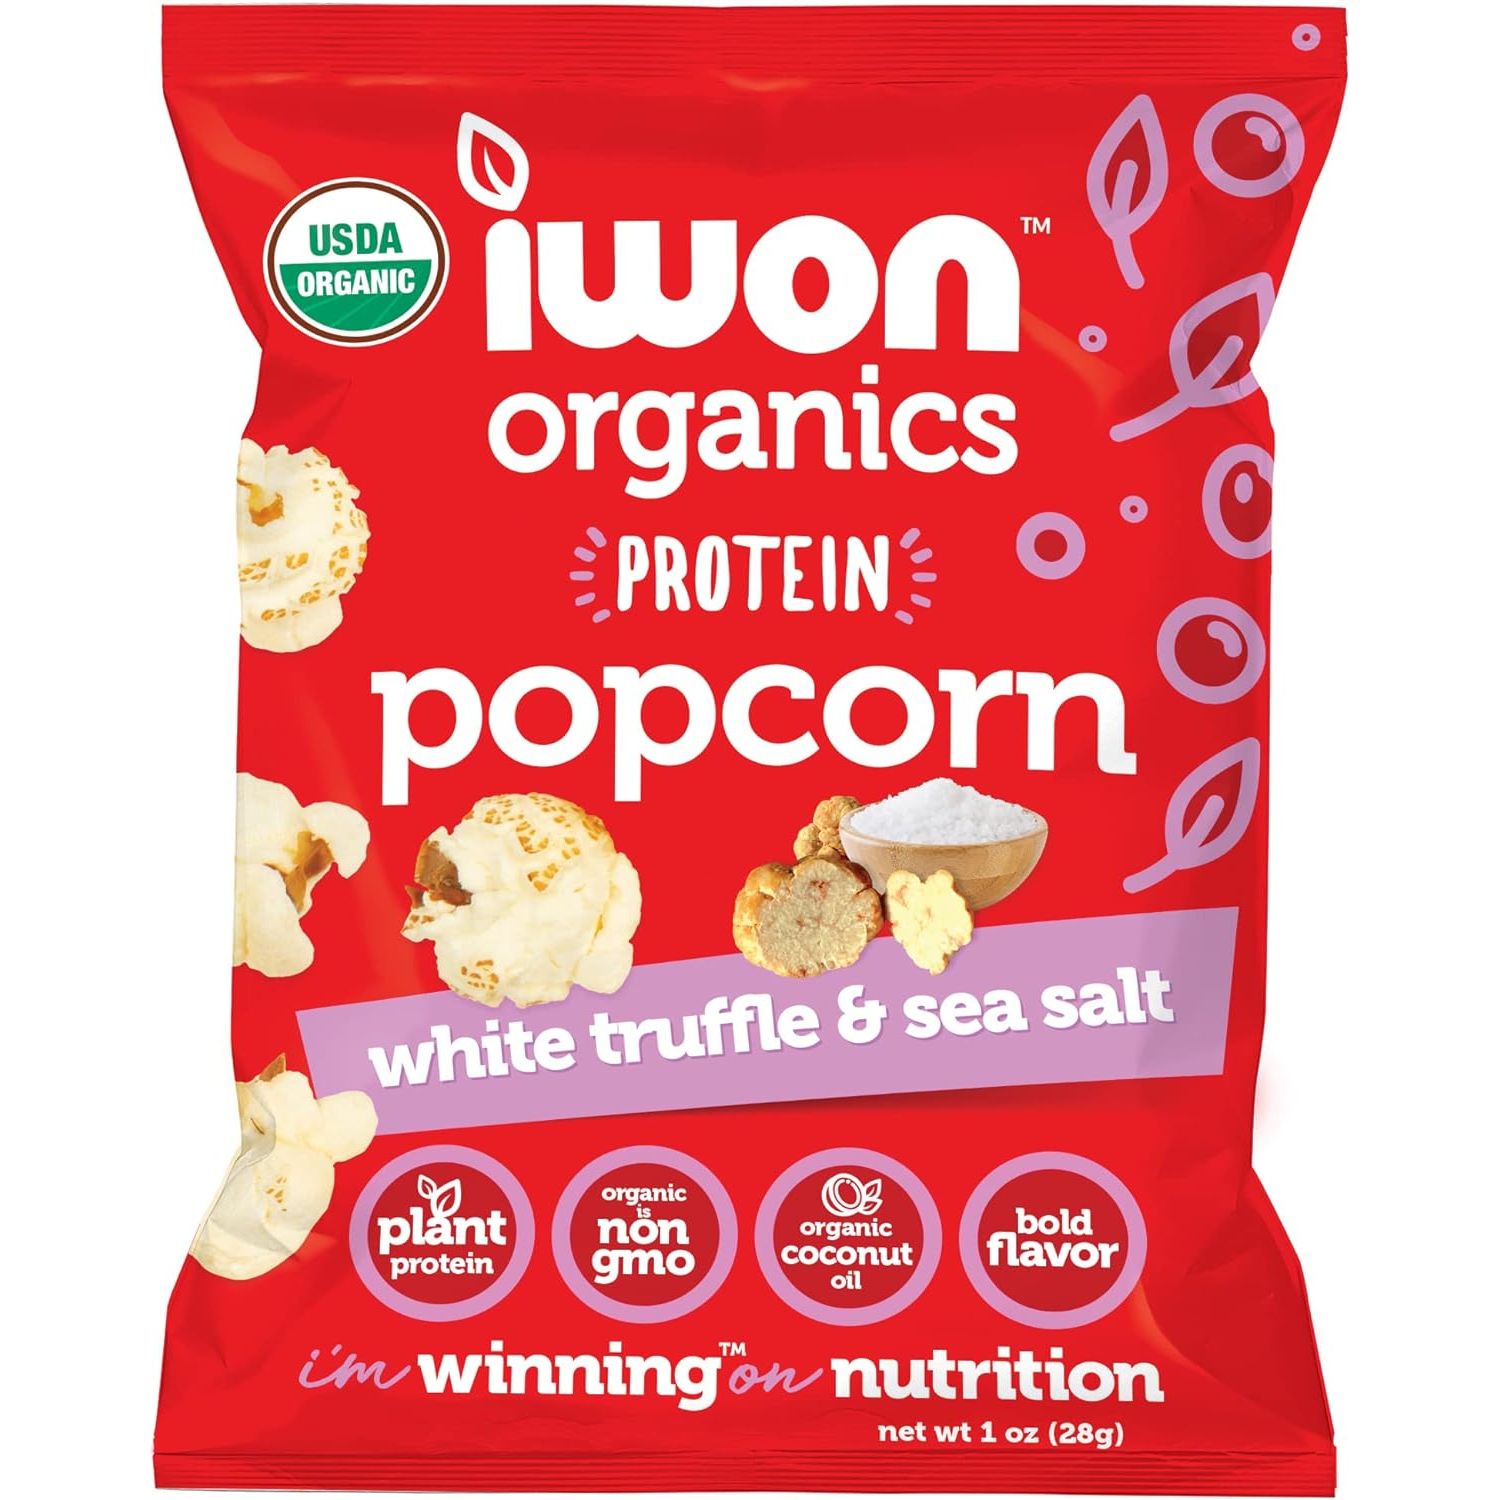 IWON Organics Protein Popcorn (1 bag) Protein Snacks White Truffle & Sea Salt IWON Organics iwon-organics-protein-popcorn-1-bag